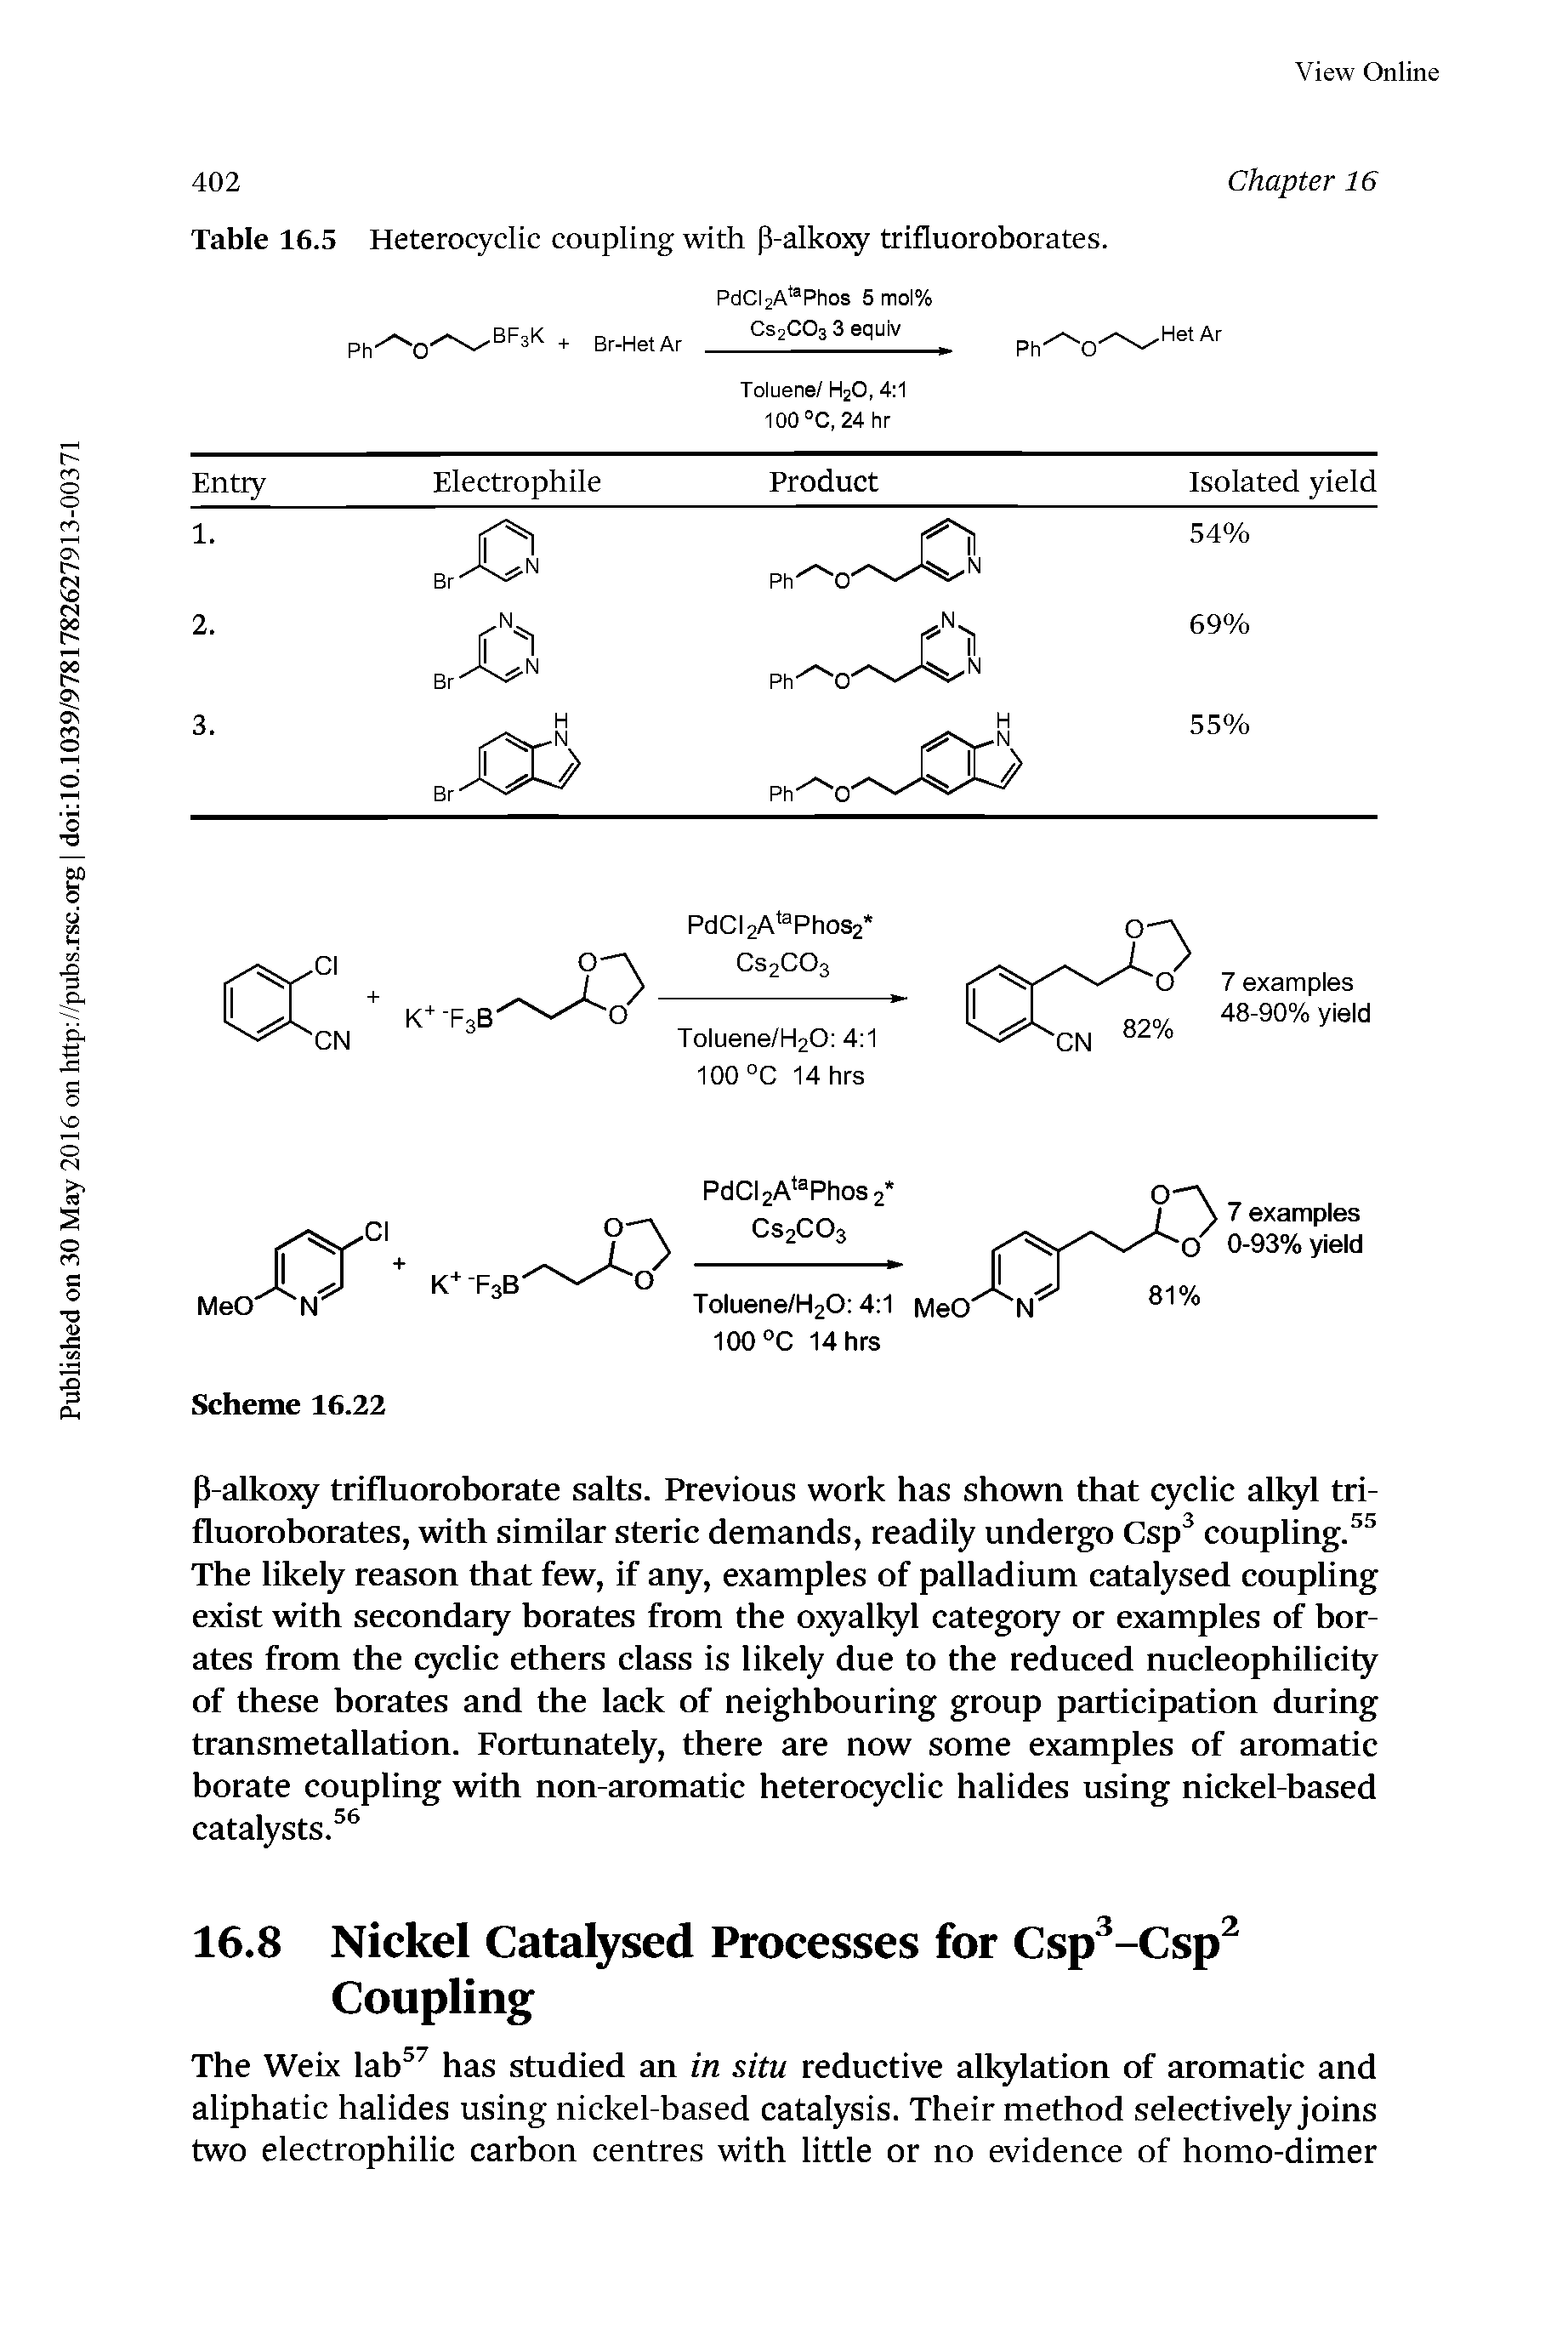 Table 16.5 Heterocyclic coupling with p-alko>y trifluoroborates.